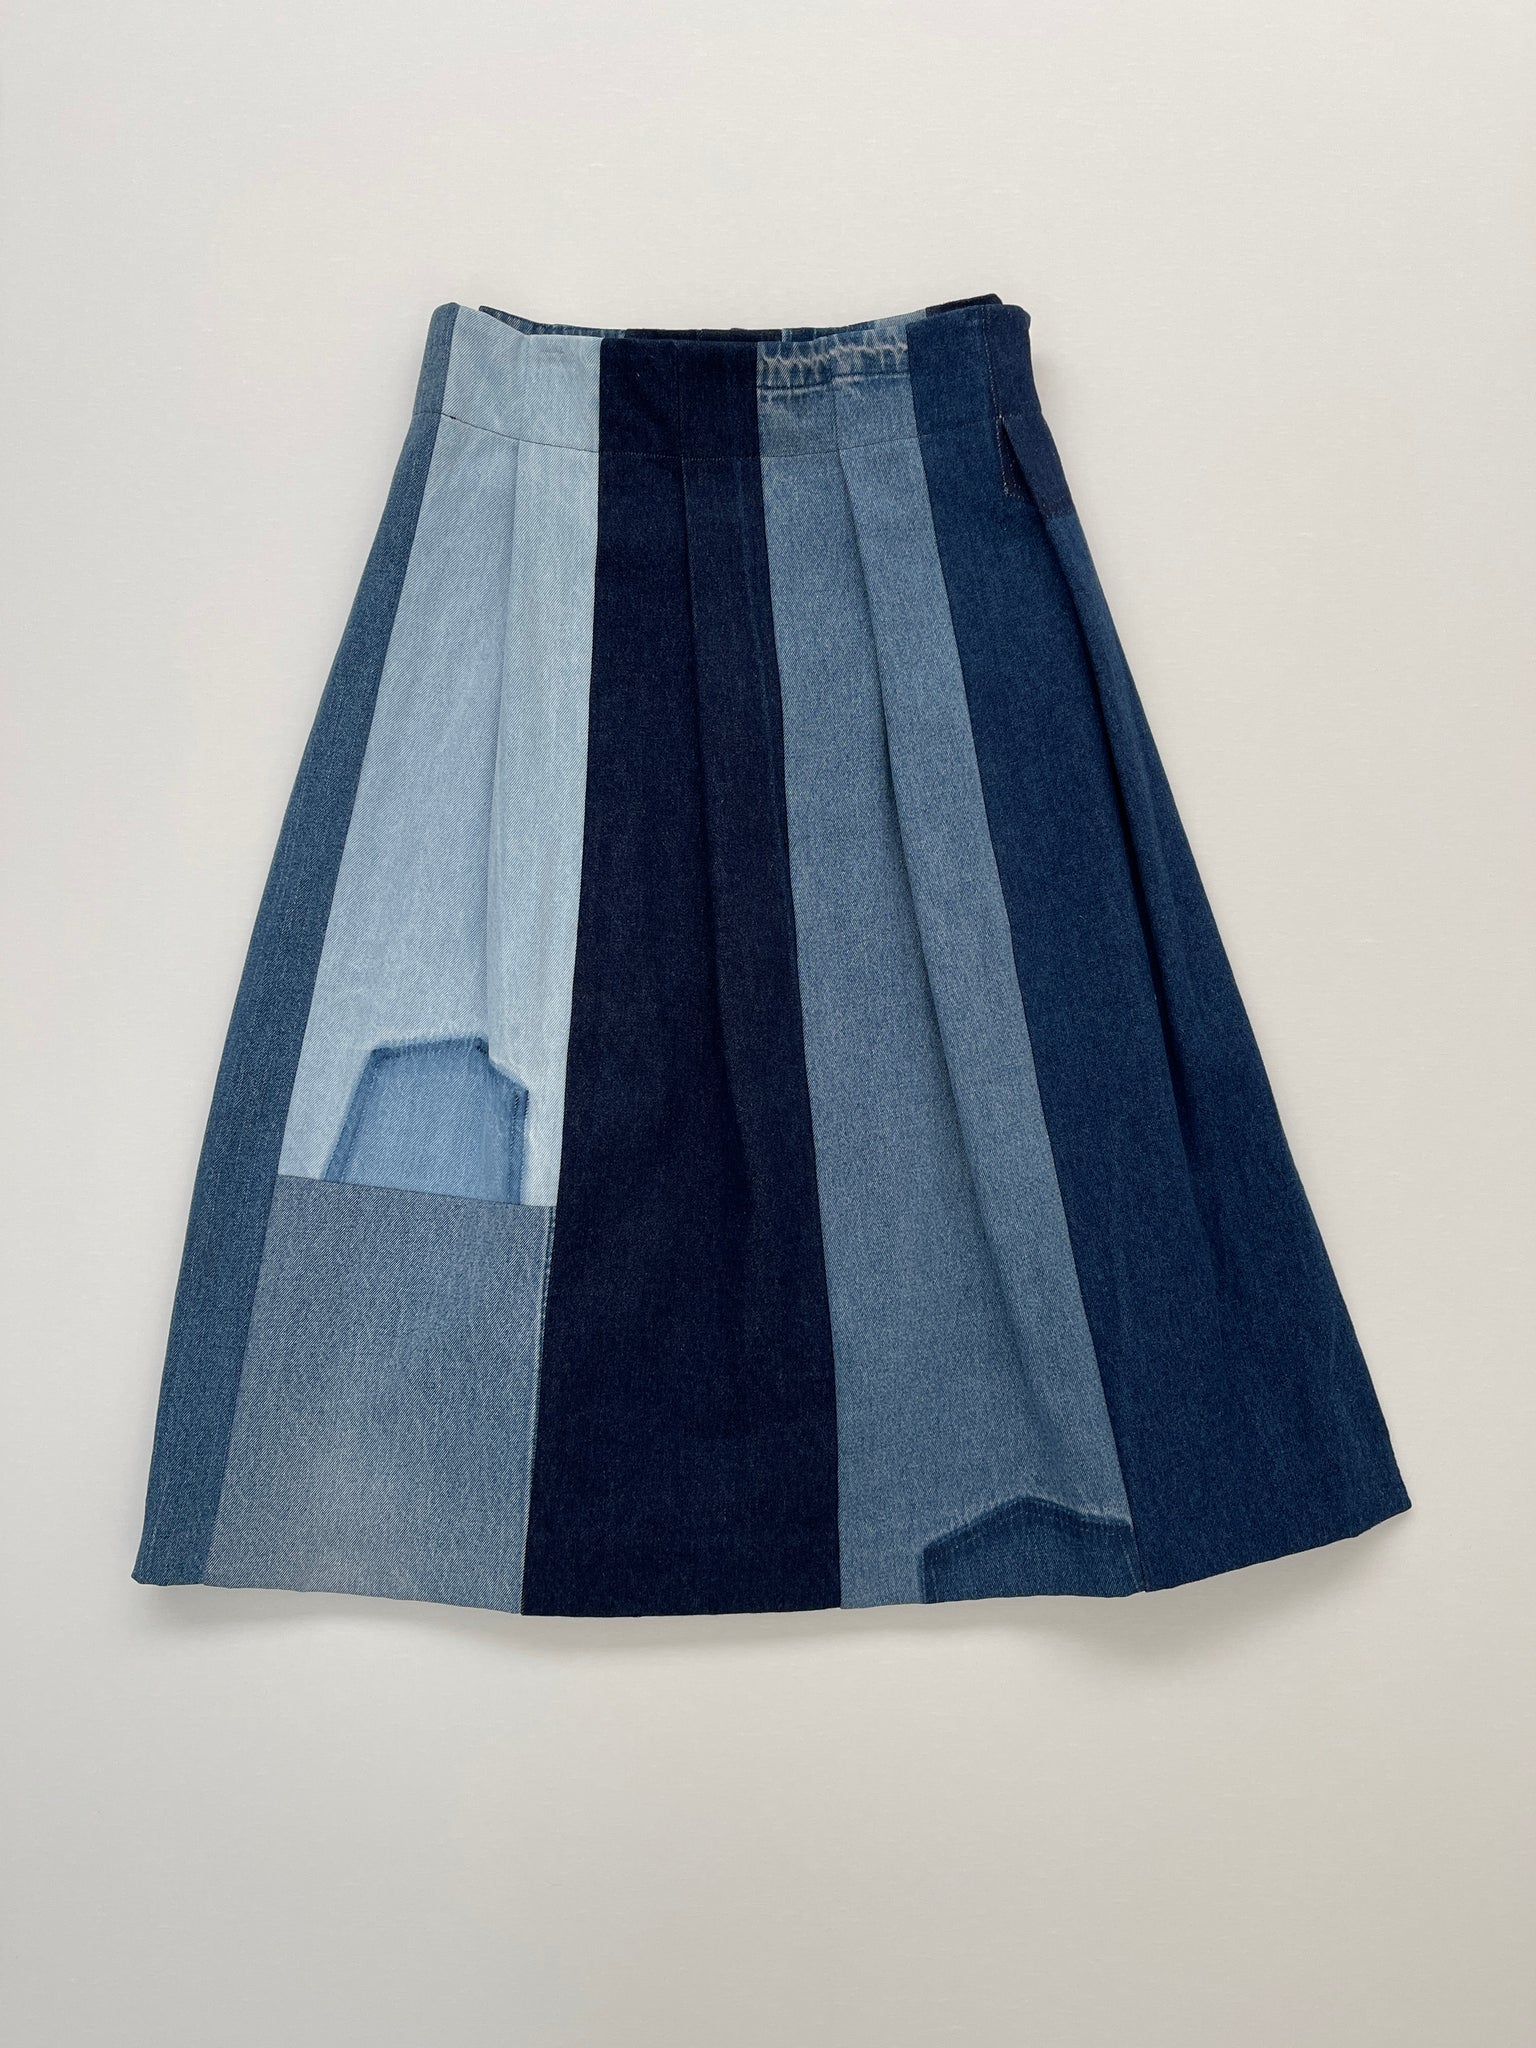 Crofter skirt - blue denim M-L